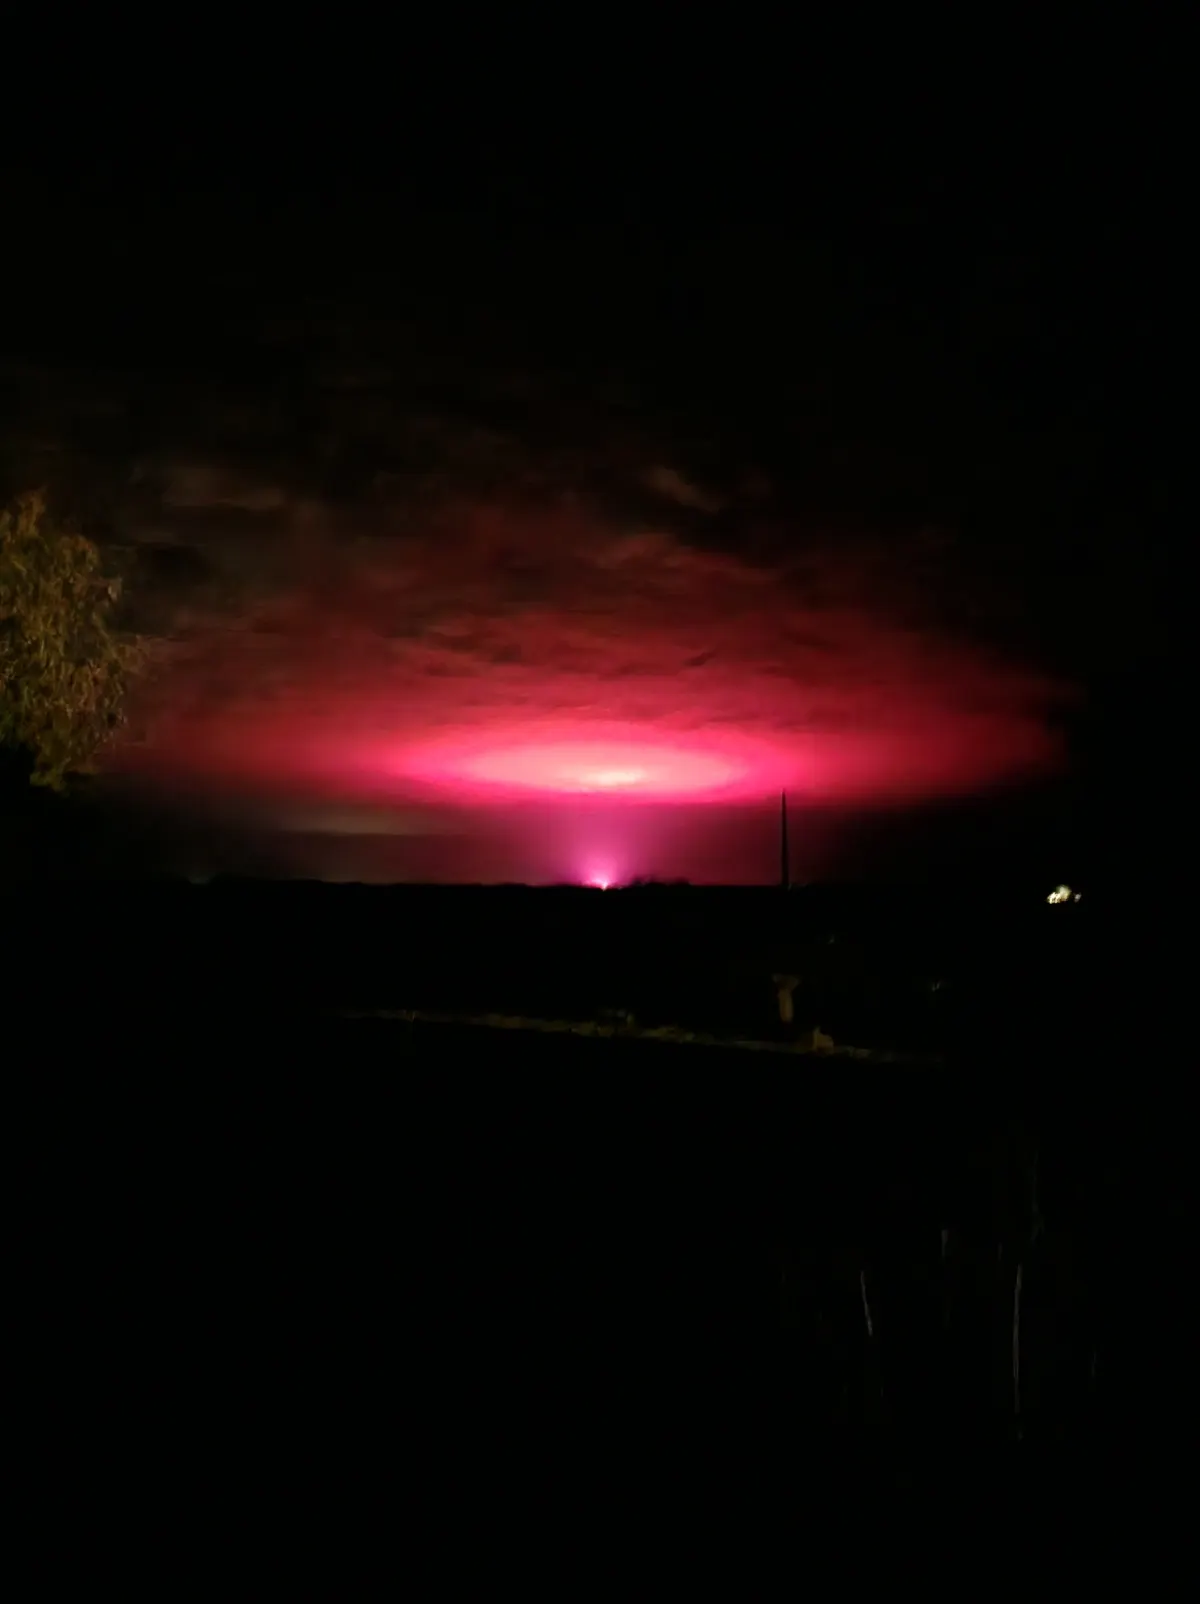 Eerie Pink Glow In The Sky of An Australian Town